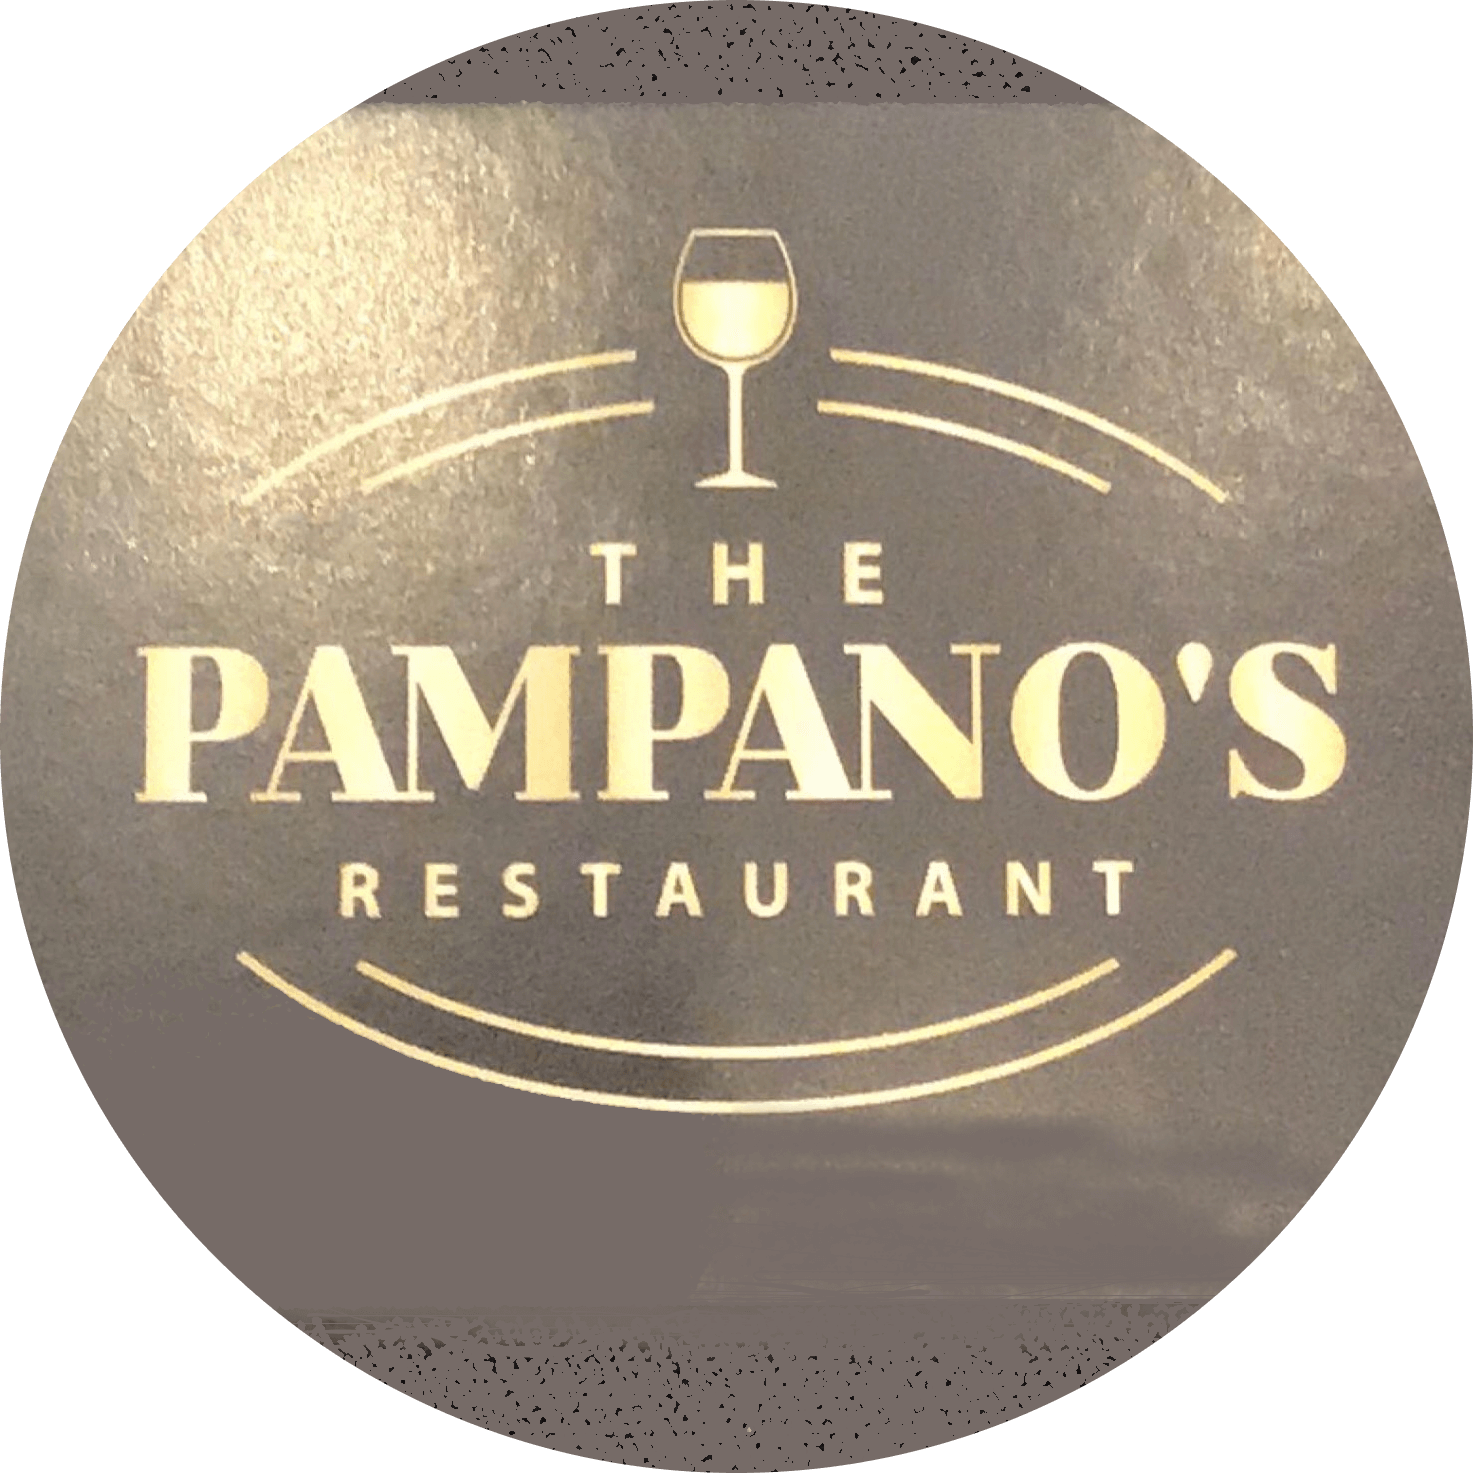 The Pampano's Restaurant logo